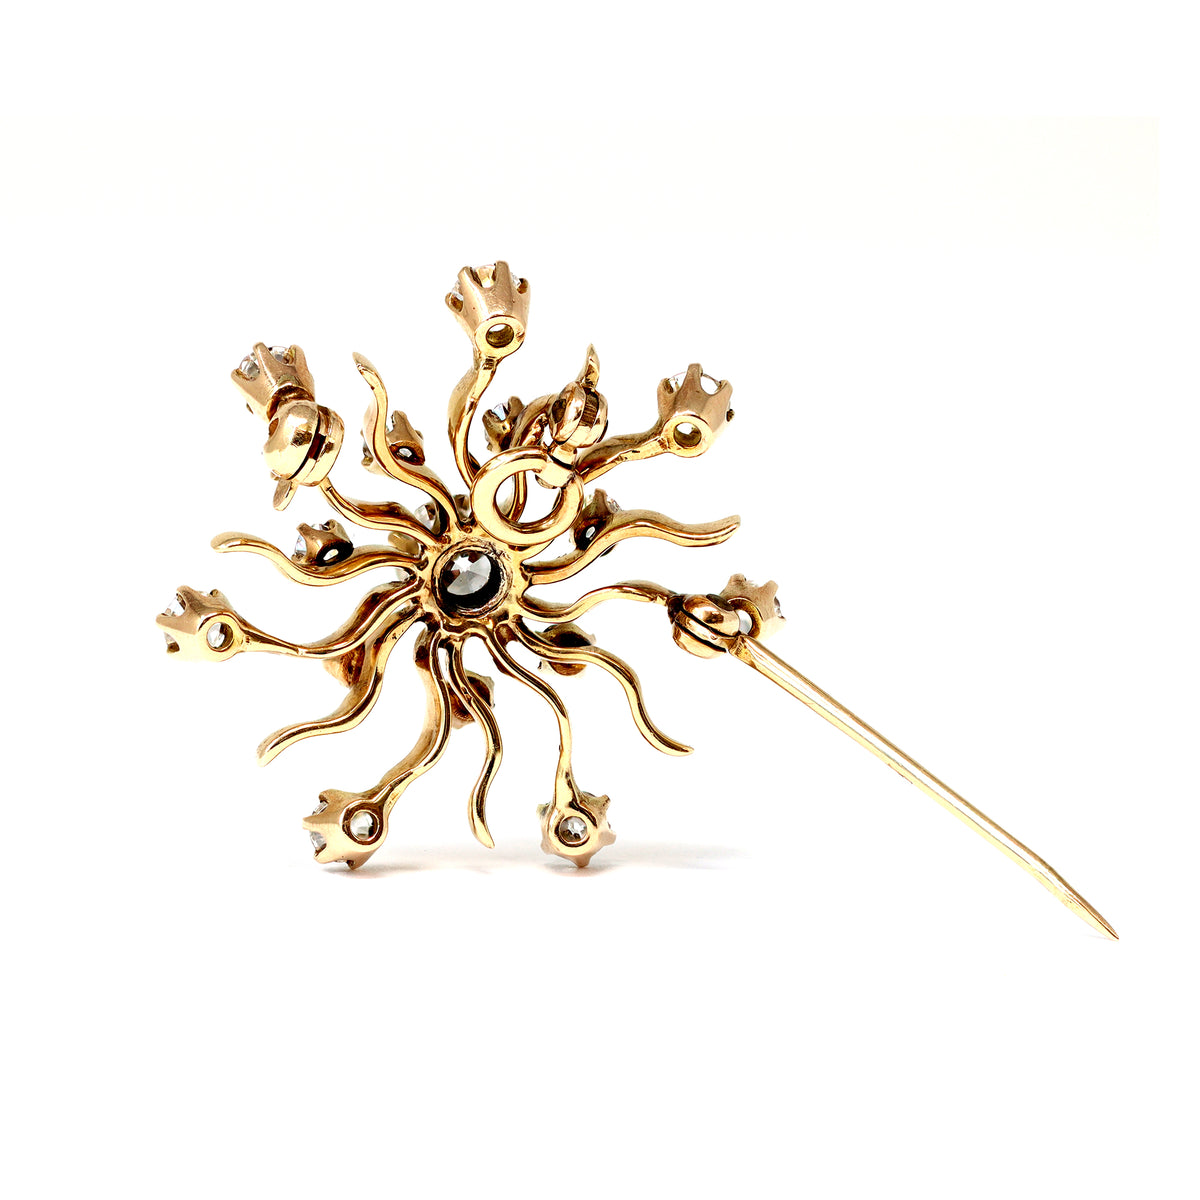 Victorian-diamond-starburst-brooch-and-pendant-set-in-14-karat-yellow-gold-back-view-2000x2000